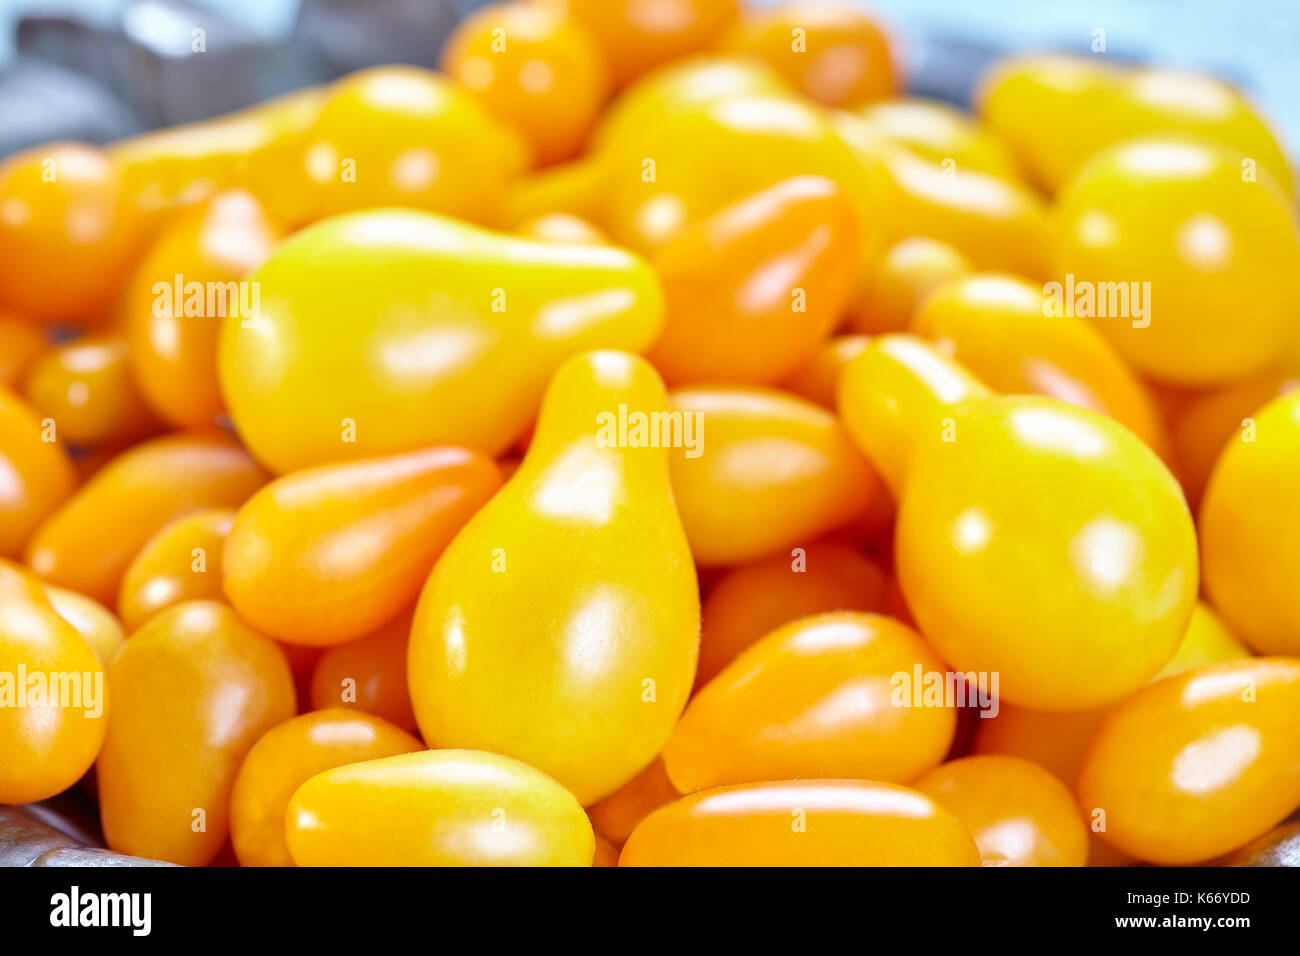 Varieties of yellow Heirloom cherry tomatoes called yellow pear and yellow datterino (or plum) cherry tomatoes. Stock Photo